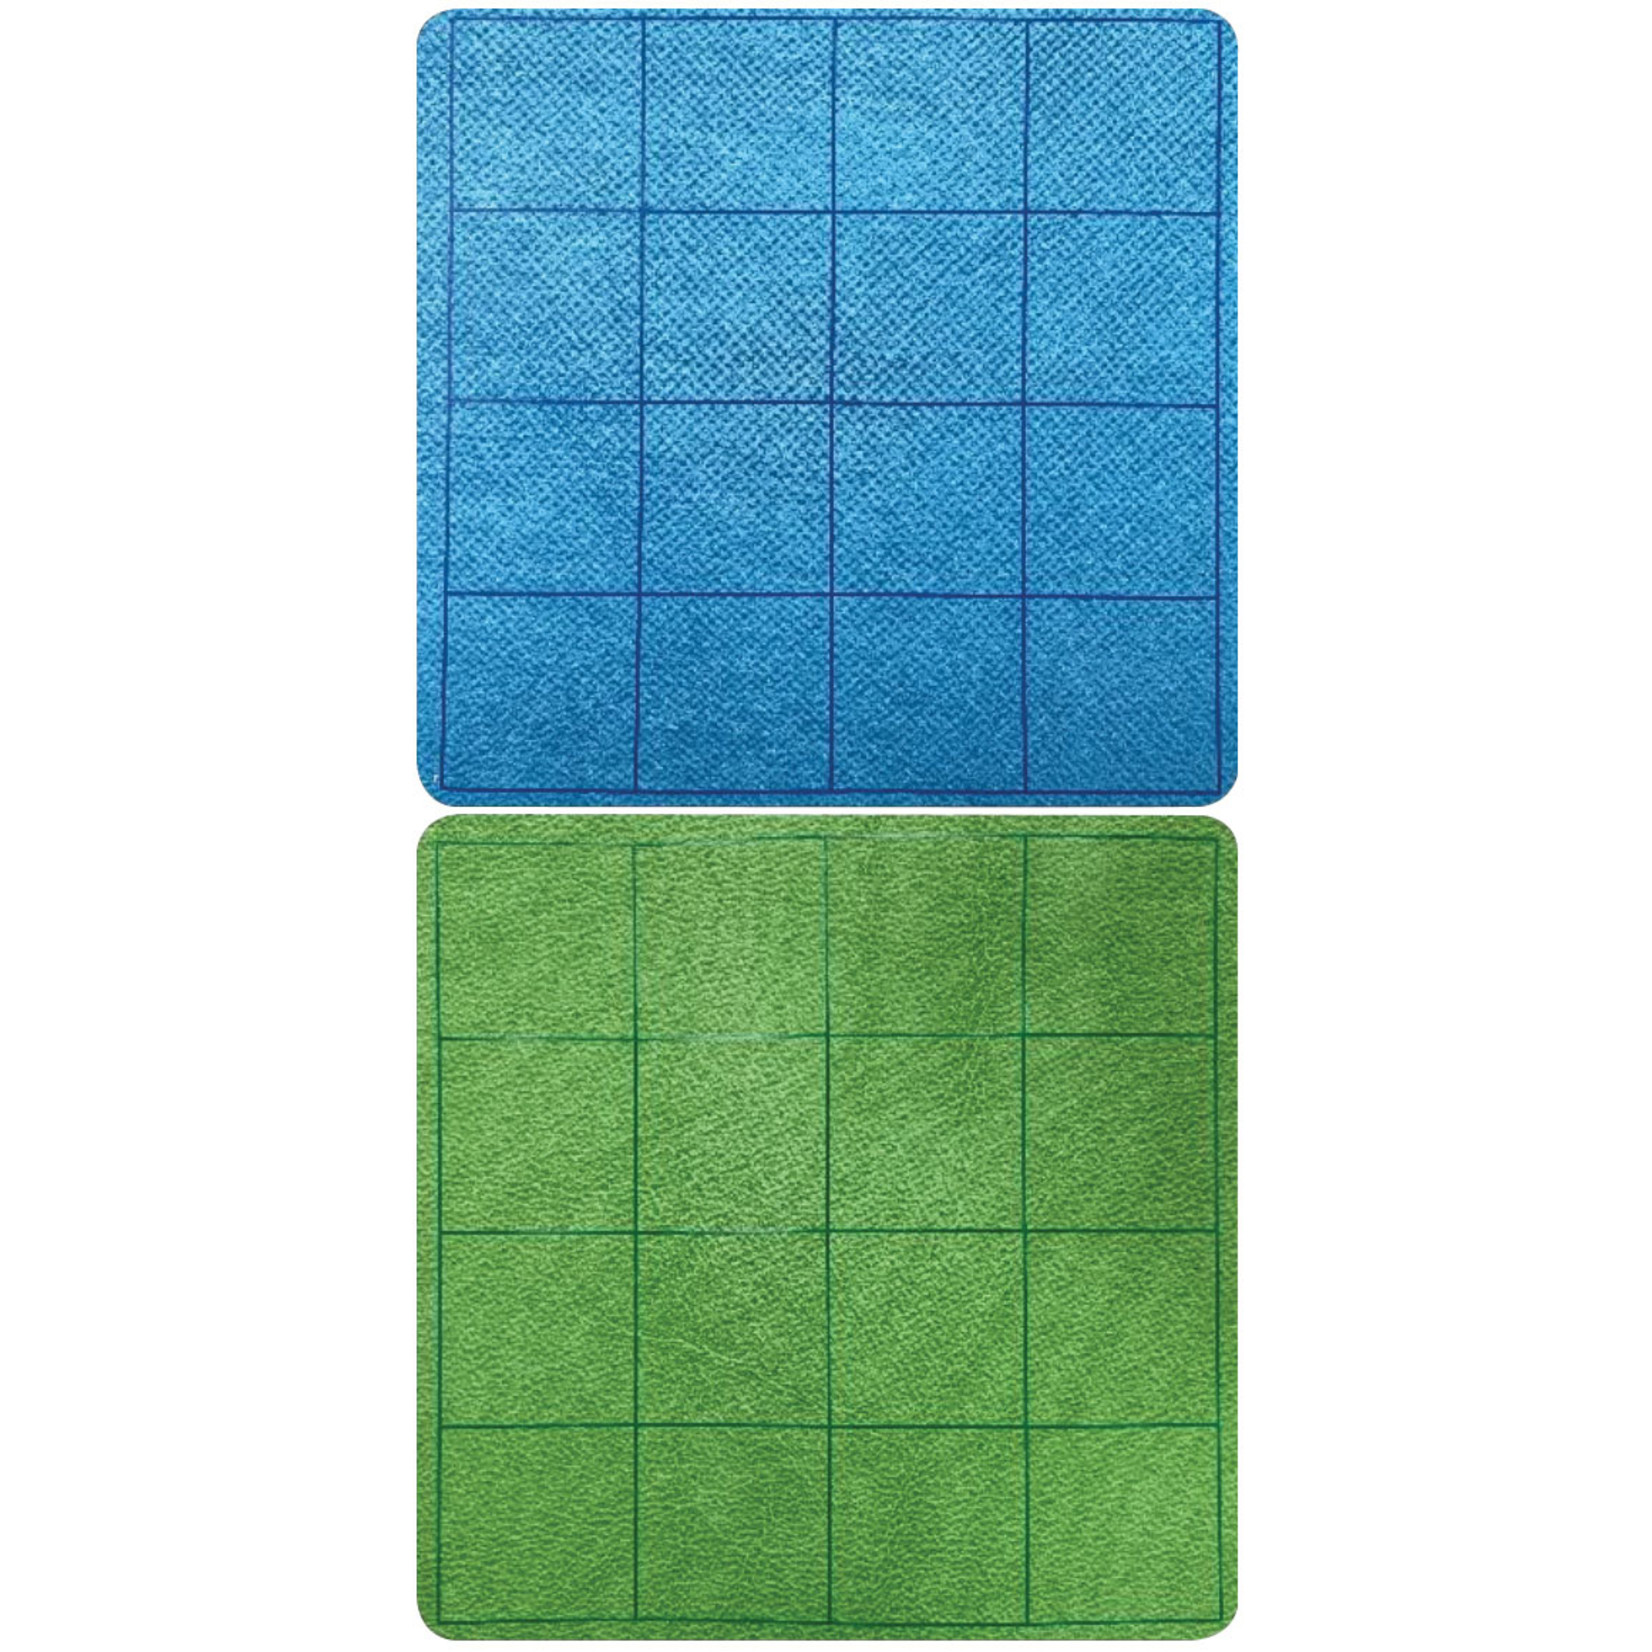 Chessex Reversible Megamat 1" Blue-Green Squares 34.5" x 48"